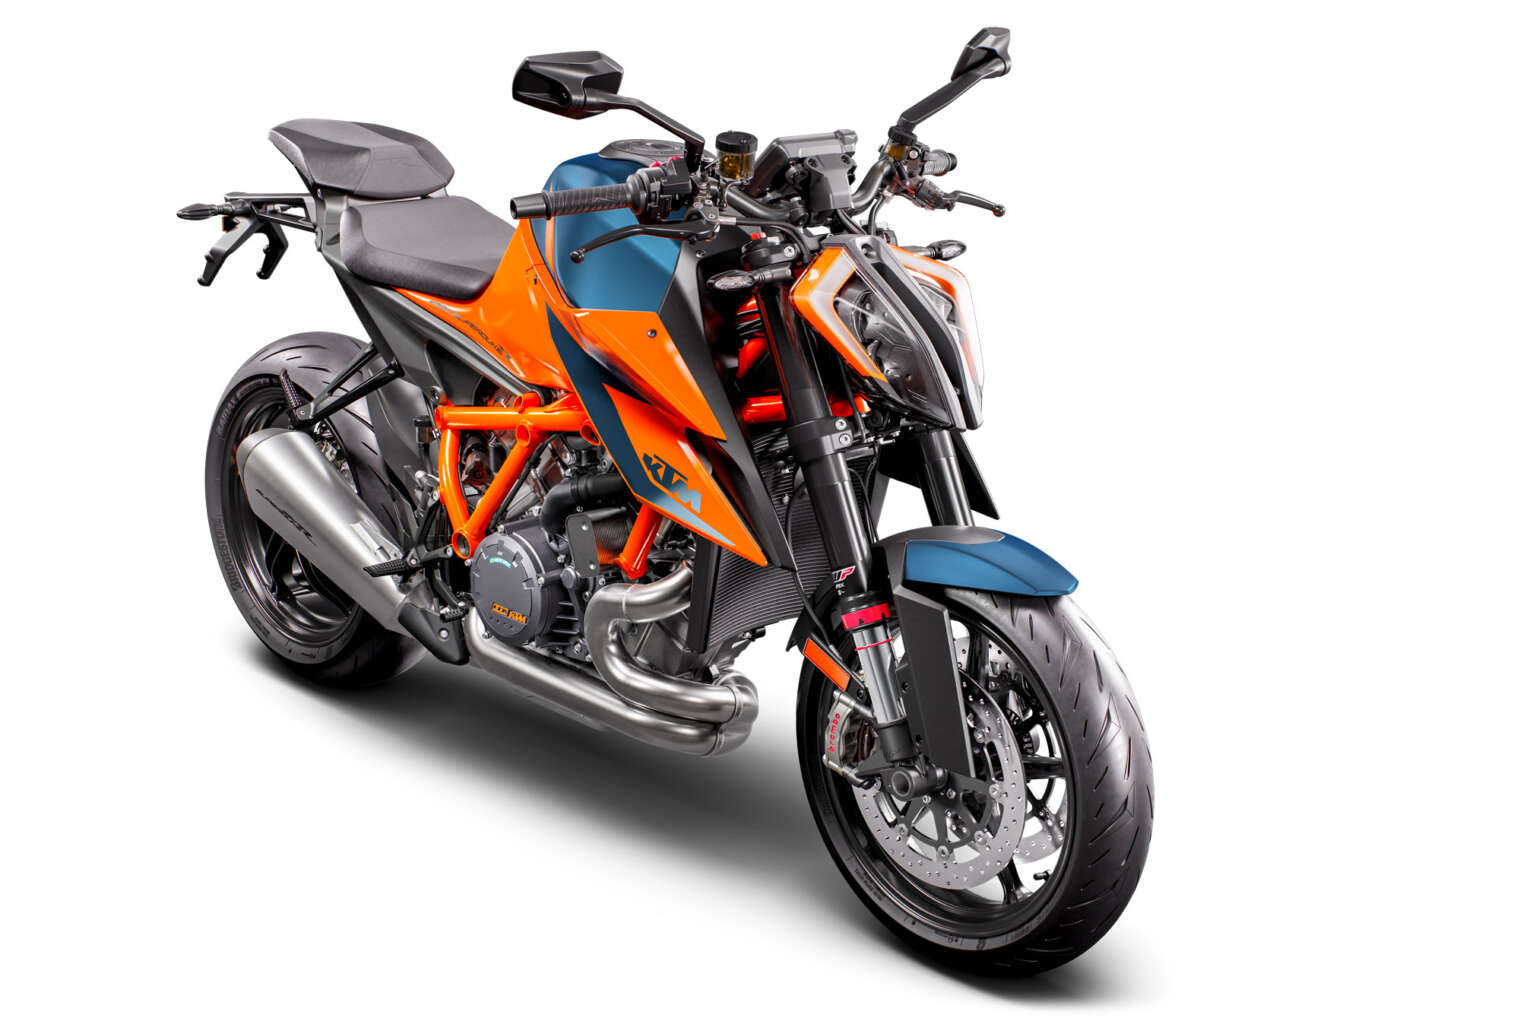 2021 KTM 1290 Super Duke R Guide • Total Motorcycle